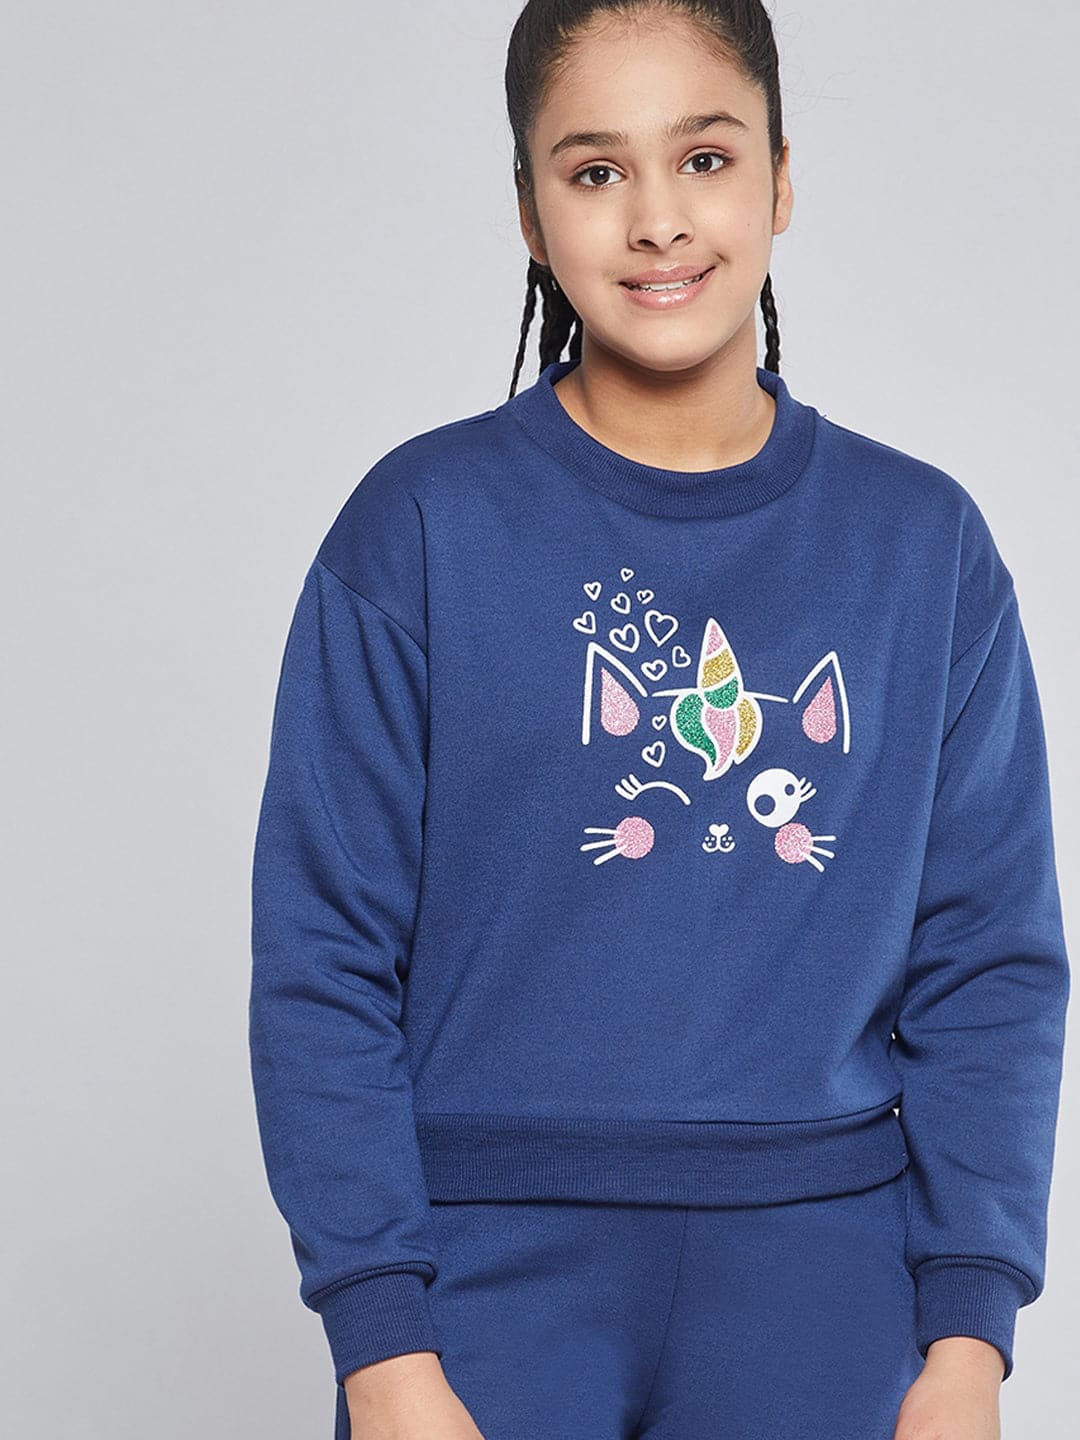 Girls Blue Fleece Glitter Print Sweatshirt-Girls Sweatshirts-SASSAFRAS